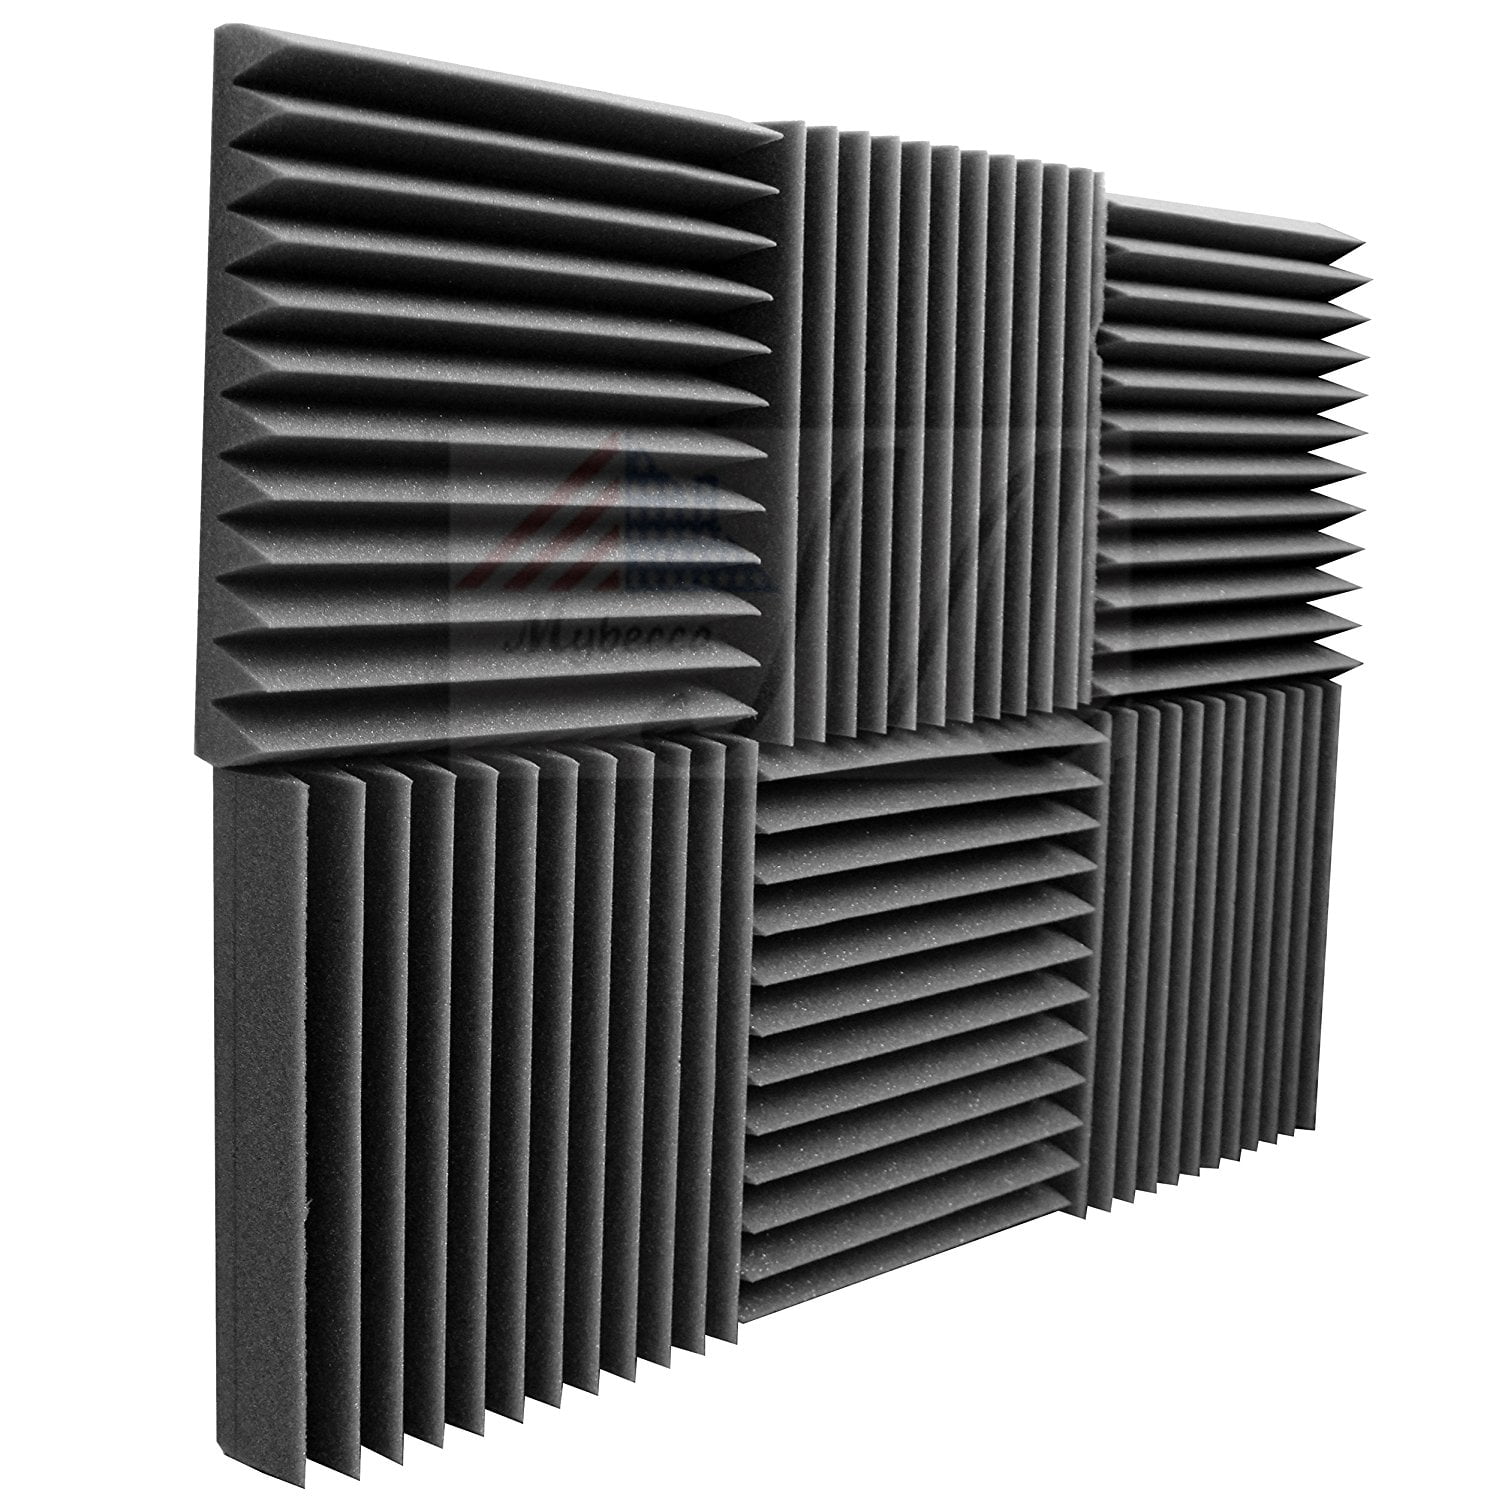 Acoustic Foam Panels 12 Pack 1”x12”x12” Sound Proof Padding Soundproofing Studio Foam Wedges blue-24pack 12 Square Feet 